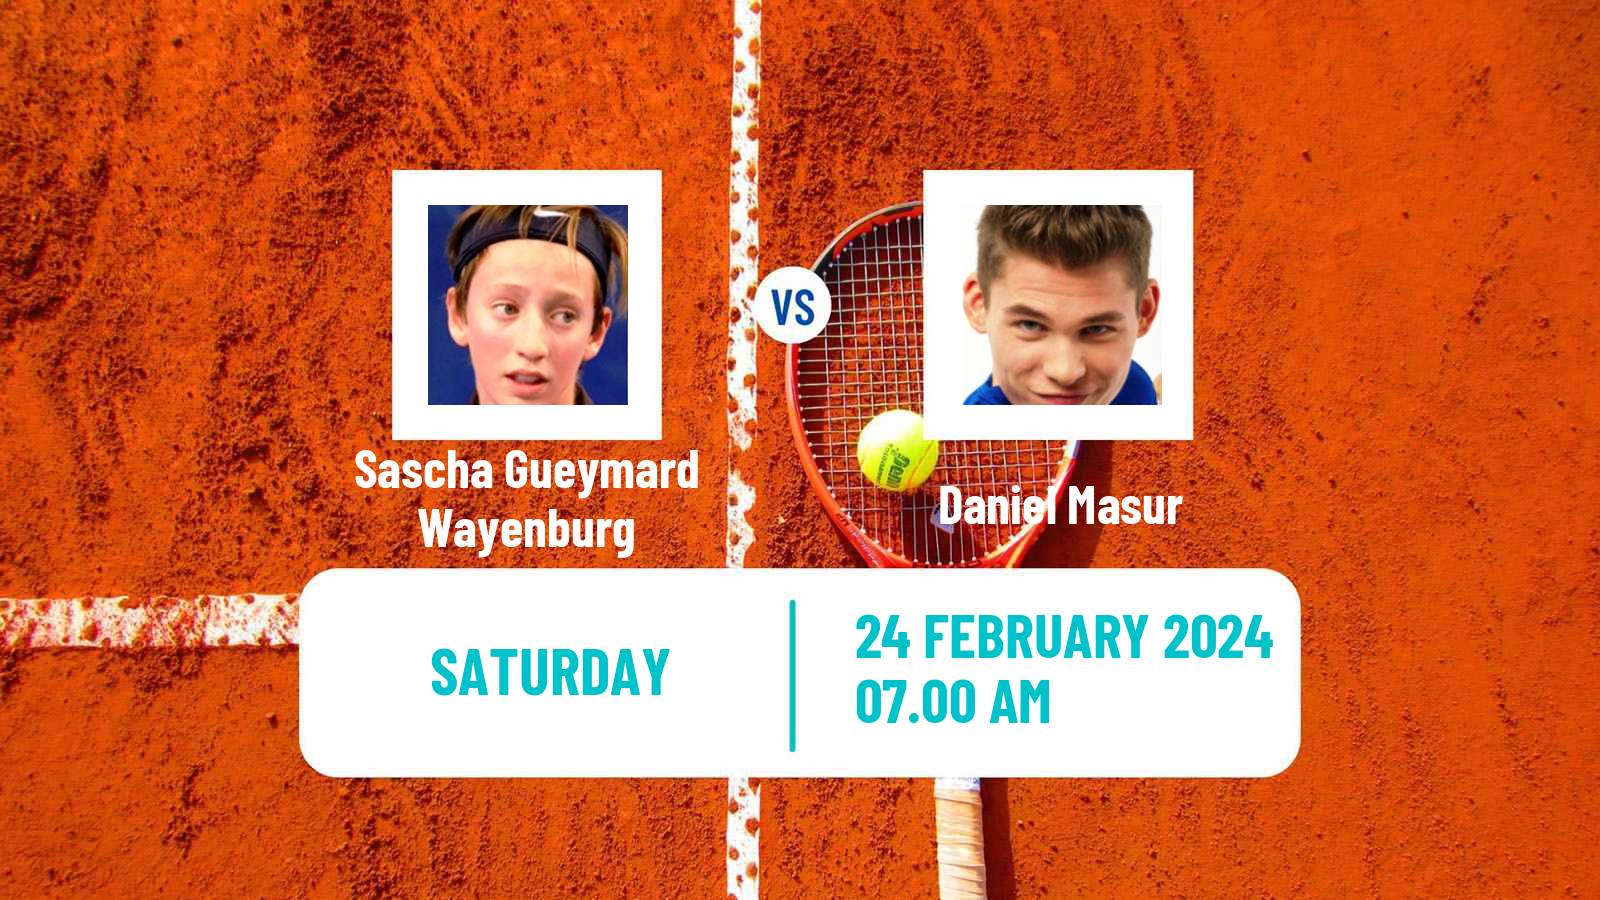 Tennis ITF M25 Trento Men Sascha Gueymard Wayenburg - Daniel Masur